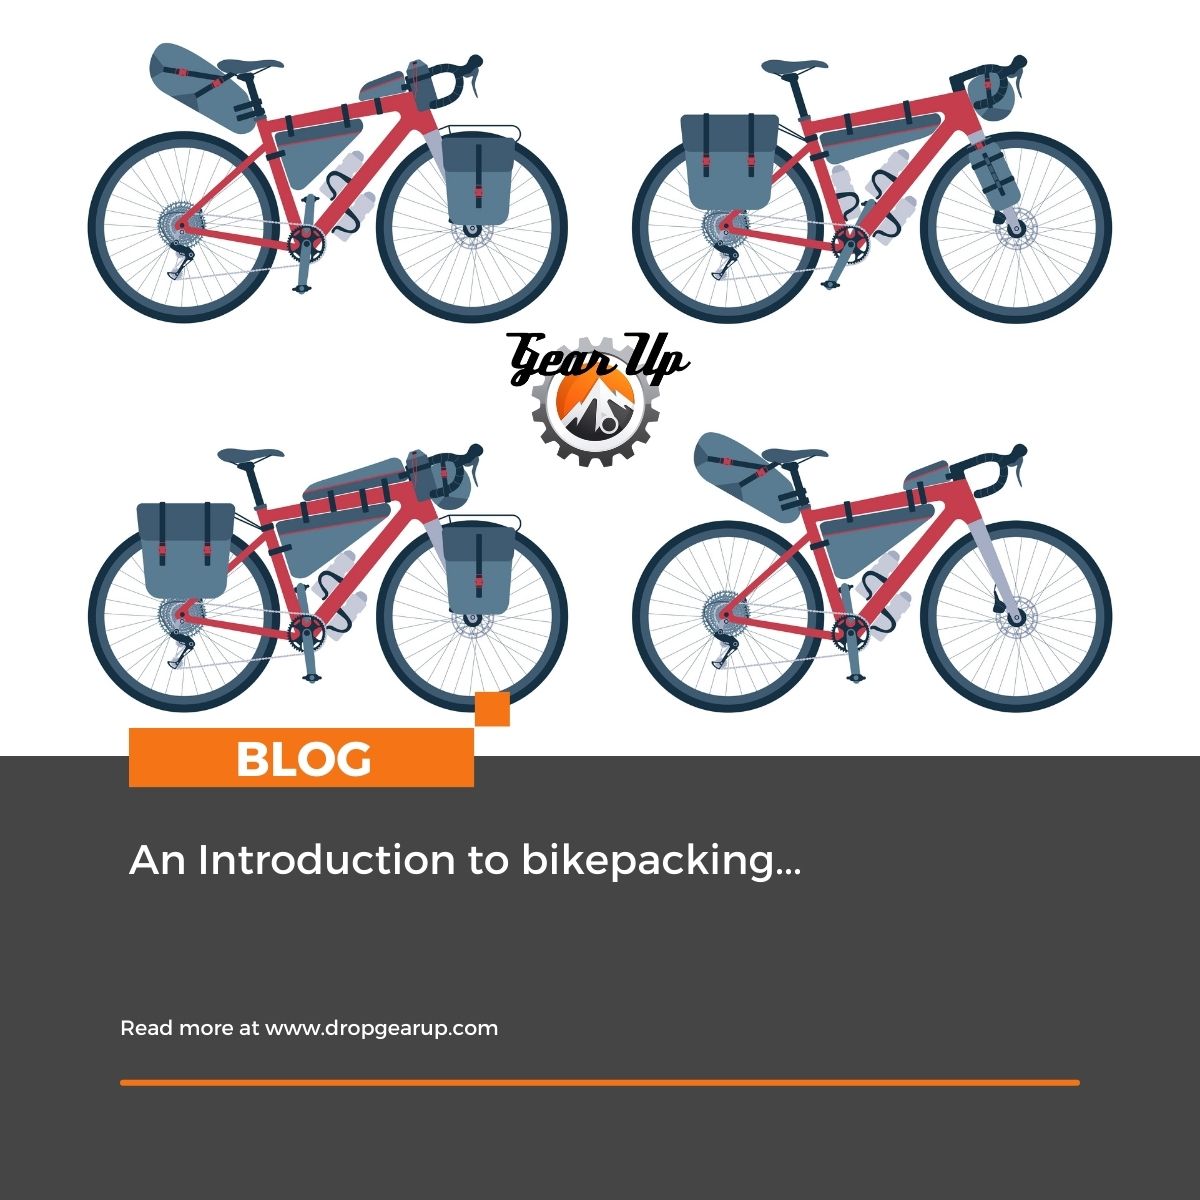 Our new Intro to Bikepacking 🚲🎒blog is live dropgearup.com/blogs/news/gea… 

#Bikepacking #AdventureTravel #Touring #BikepackingBeginner #AdventureCycling #GearUpForAdventure  #BikepackingGear #BikepackingAdventure #OutdoorAdventure  #BikepackingEssentials #BikepackingAdventures